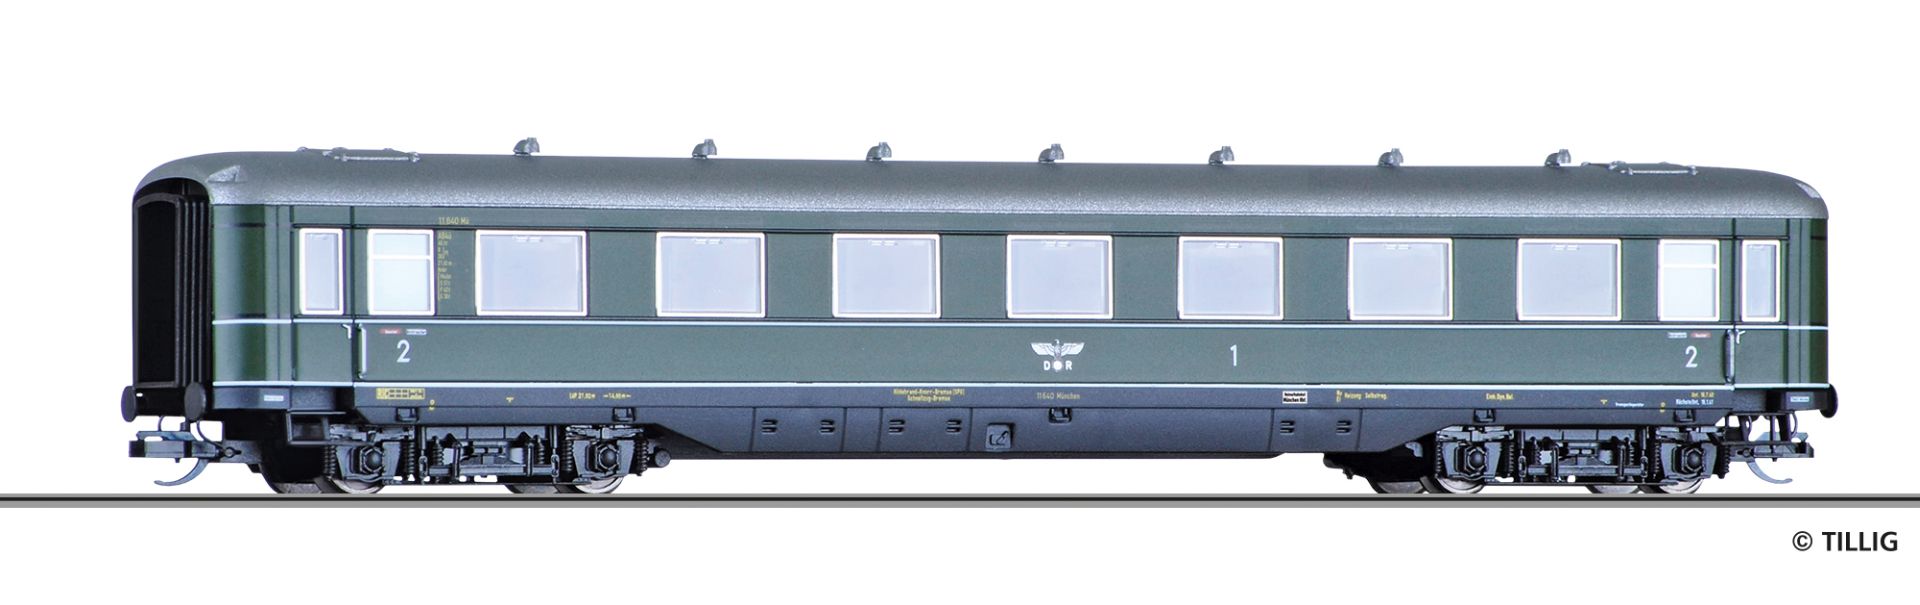 Tillig 16930 - Personenwagen AB4ü-38, 1./2. Klasse, DRG, Ep.II